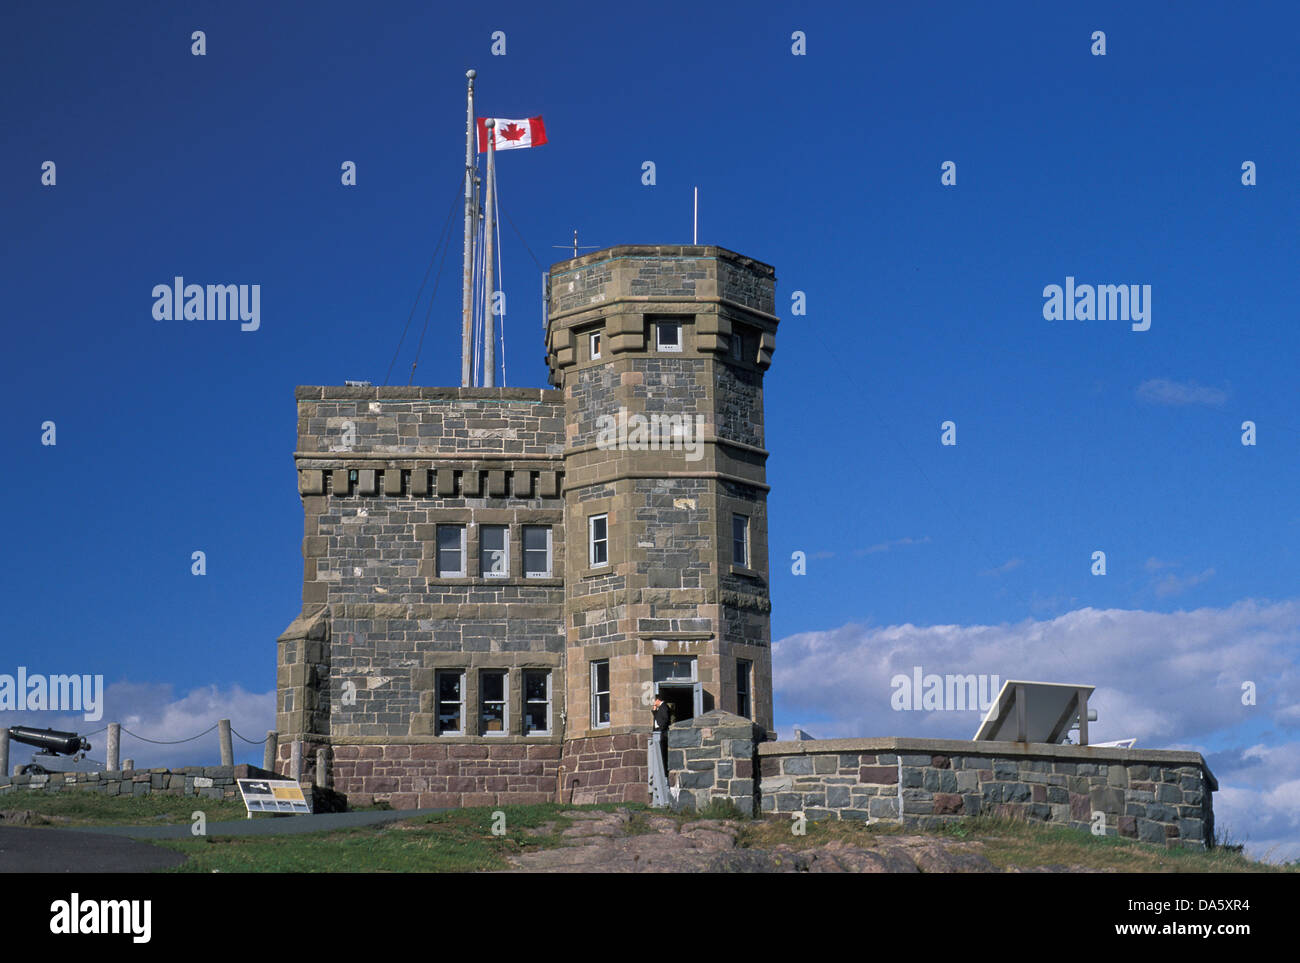 Gabot Tower, Signal Hall, National, Historic, Site, St. John's, Newfoundland, Canada, Flag, Blue sky, cannon, castle, tower, bri Stock Photo